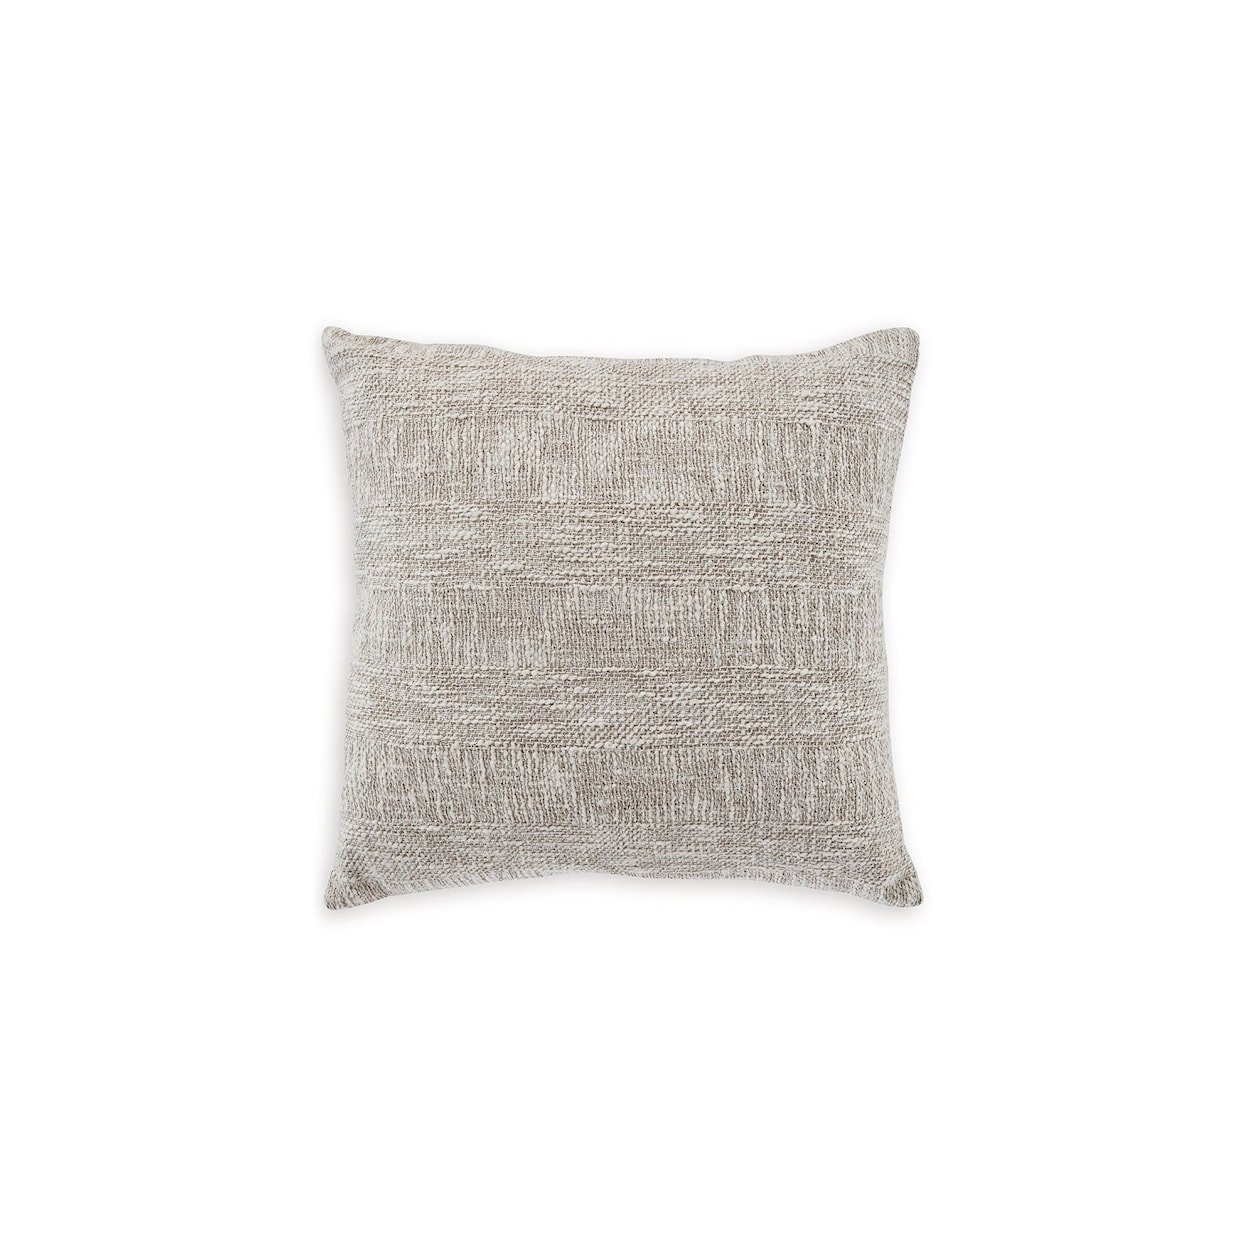 Signature Design Carddon Pillow